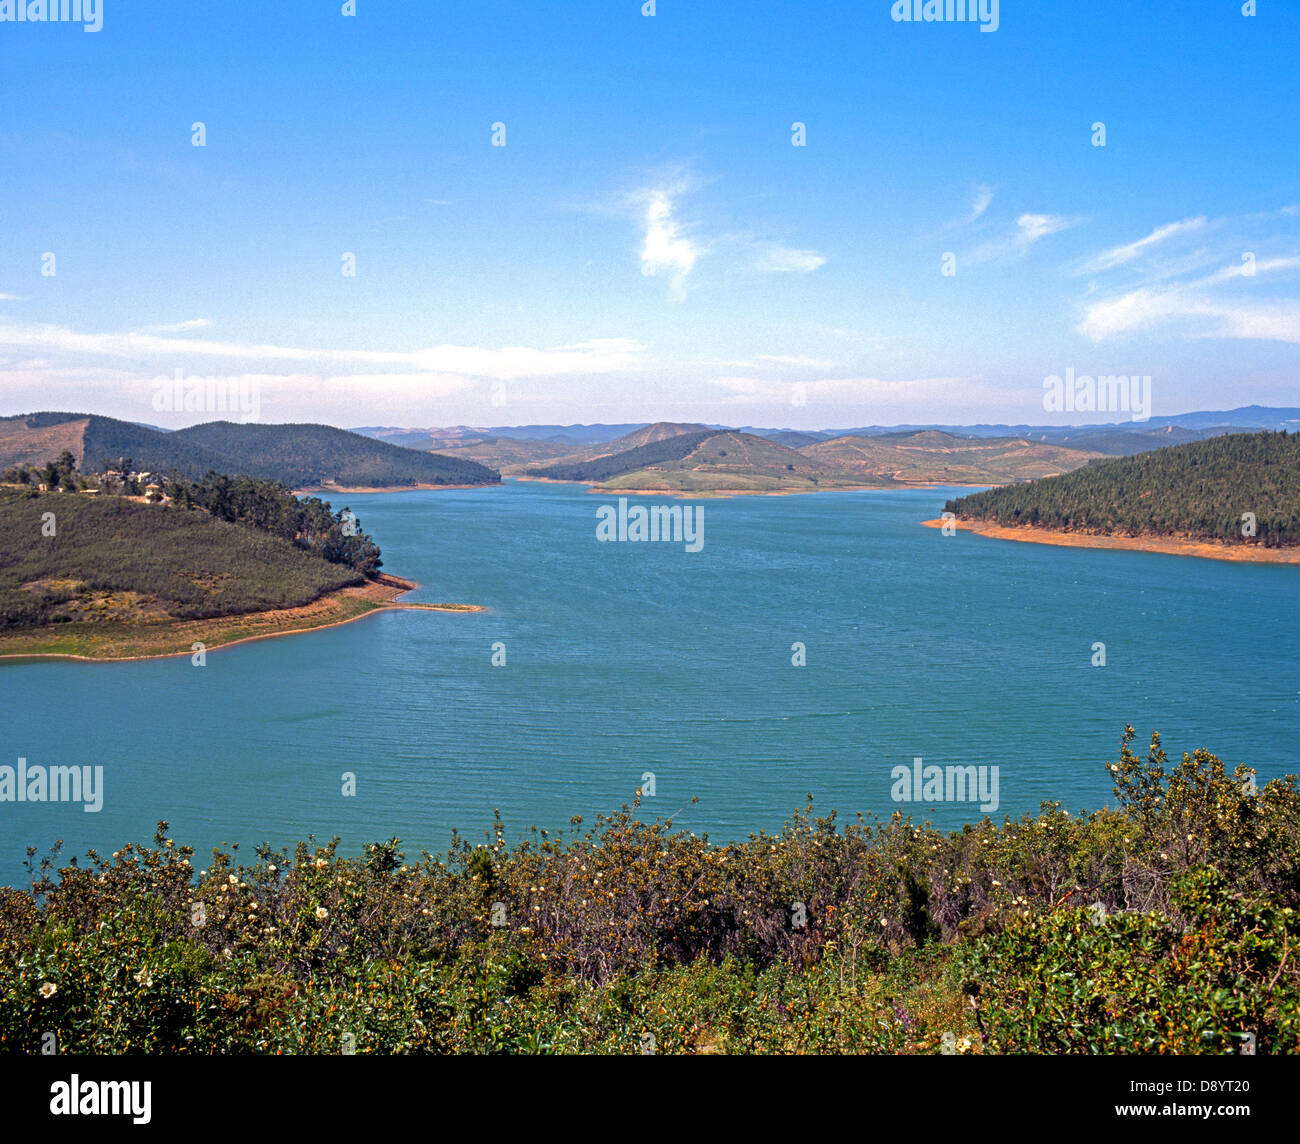 Barragem da Bravura Reservoir, Algarve, Portugal, Western Europe. Stock Photo